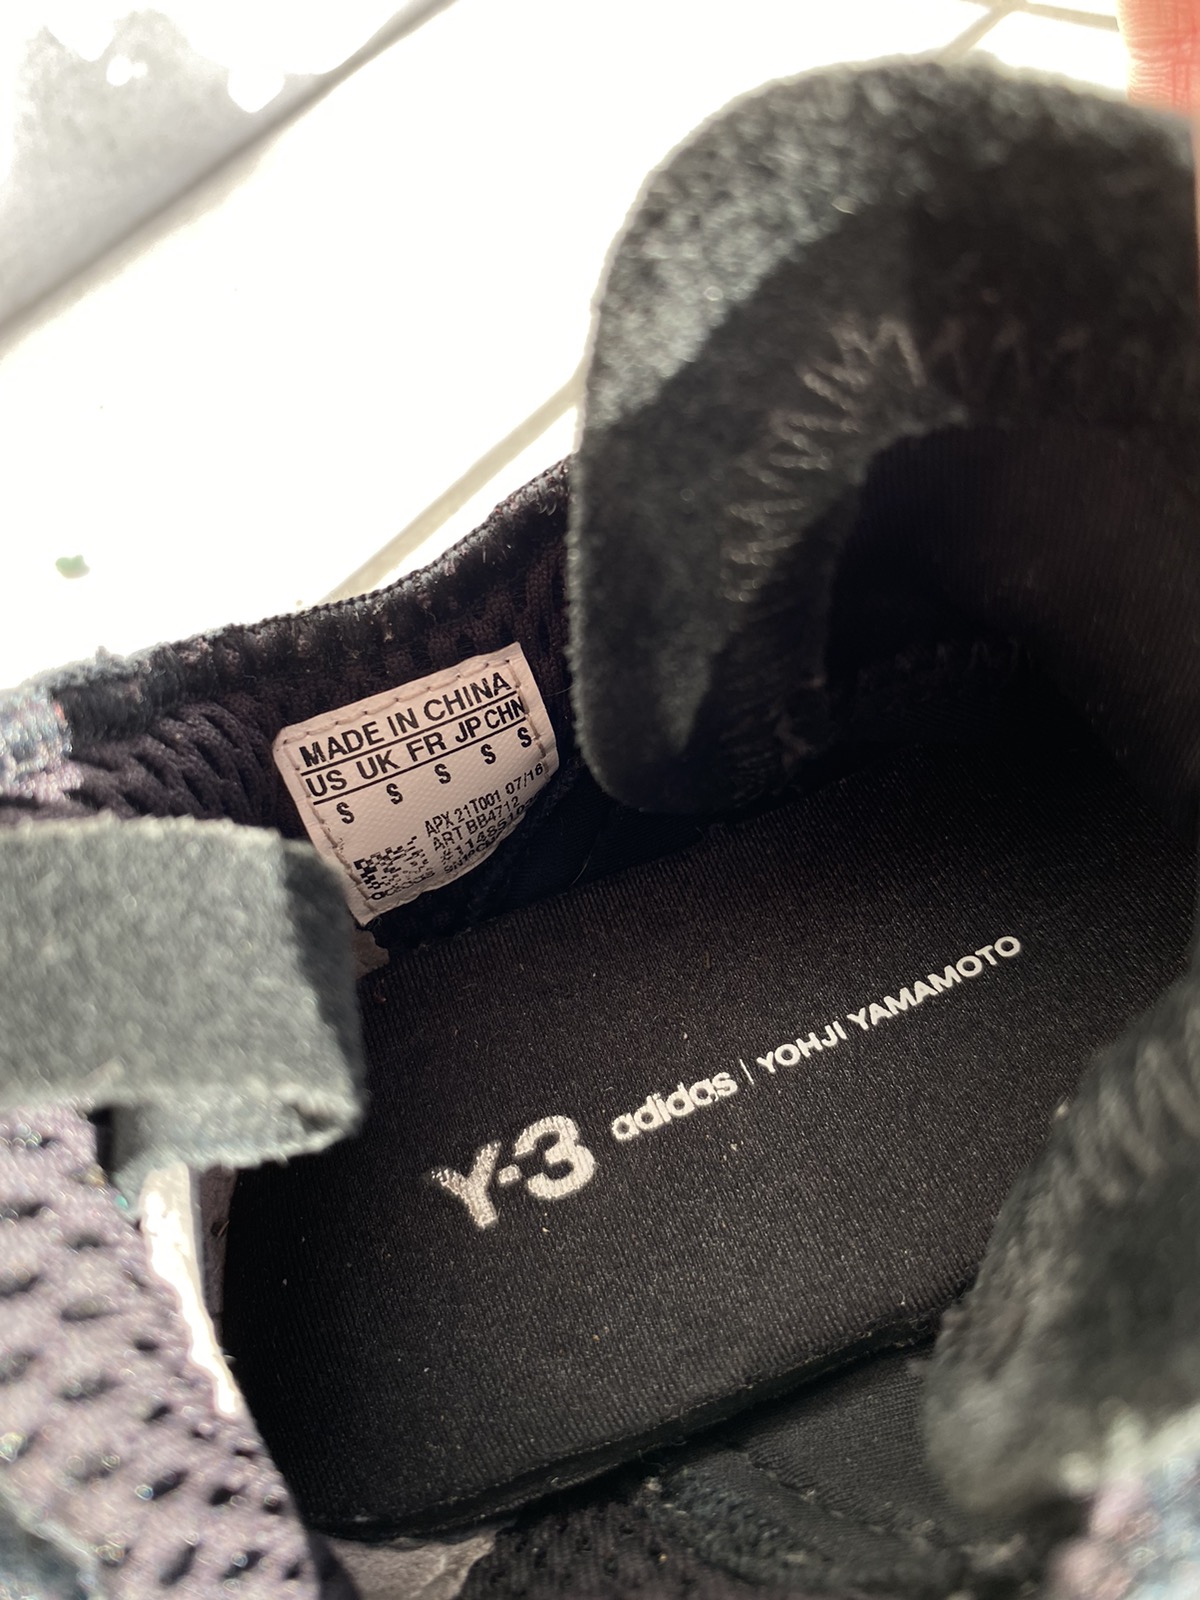 Adidas Yohji Yamamoto Y-3 Kohna y3 - 7